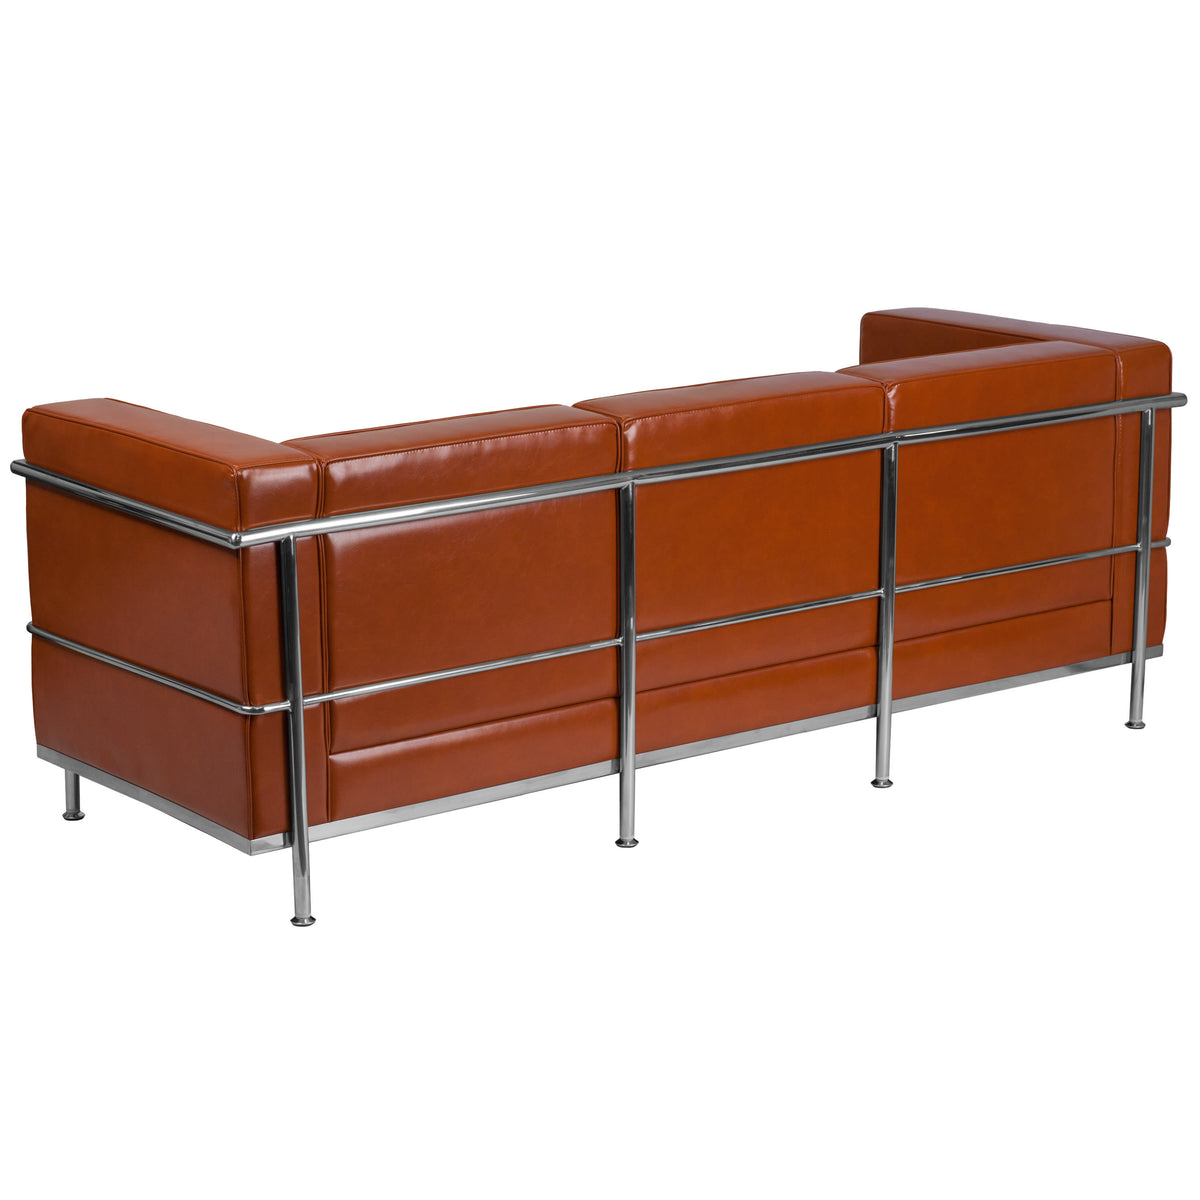 Cognac |#| Contemporary Cognac LeatherSoft Sofa with Double Bar Encasing Frame